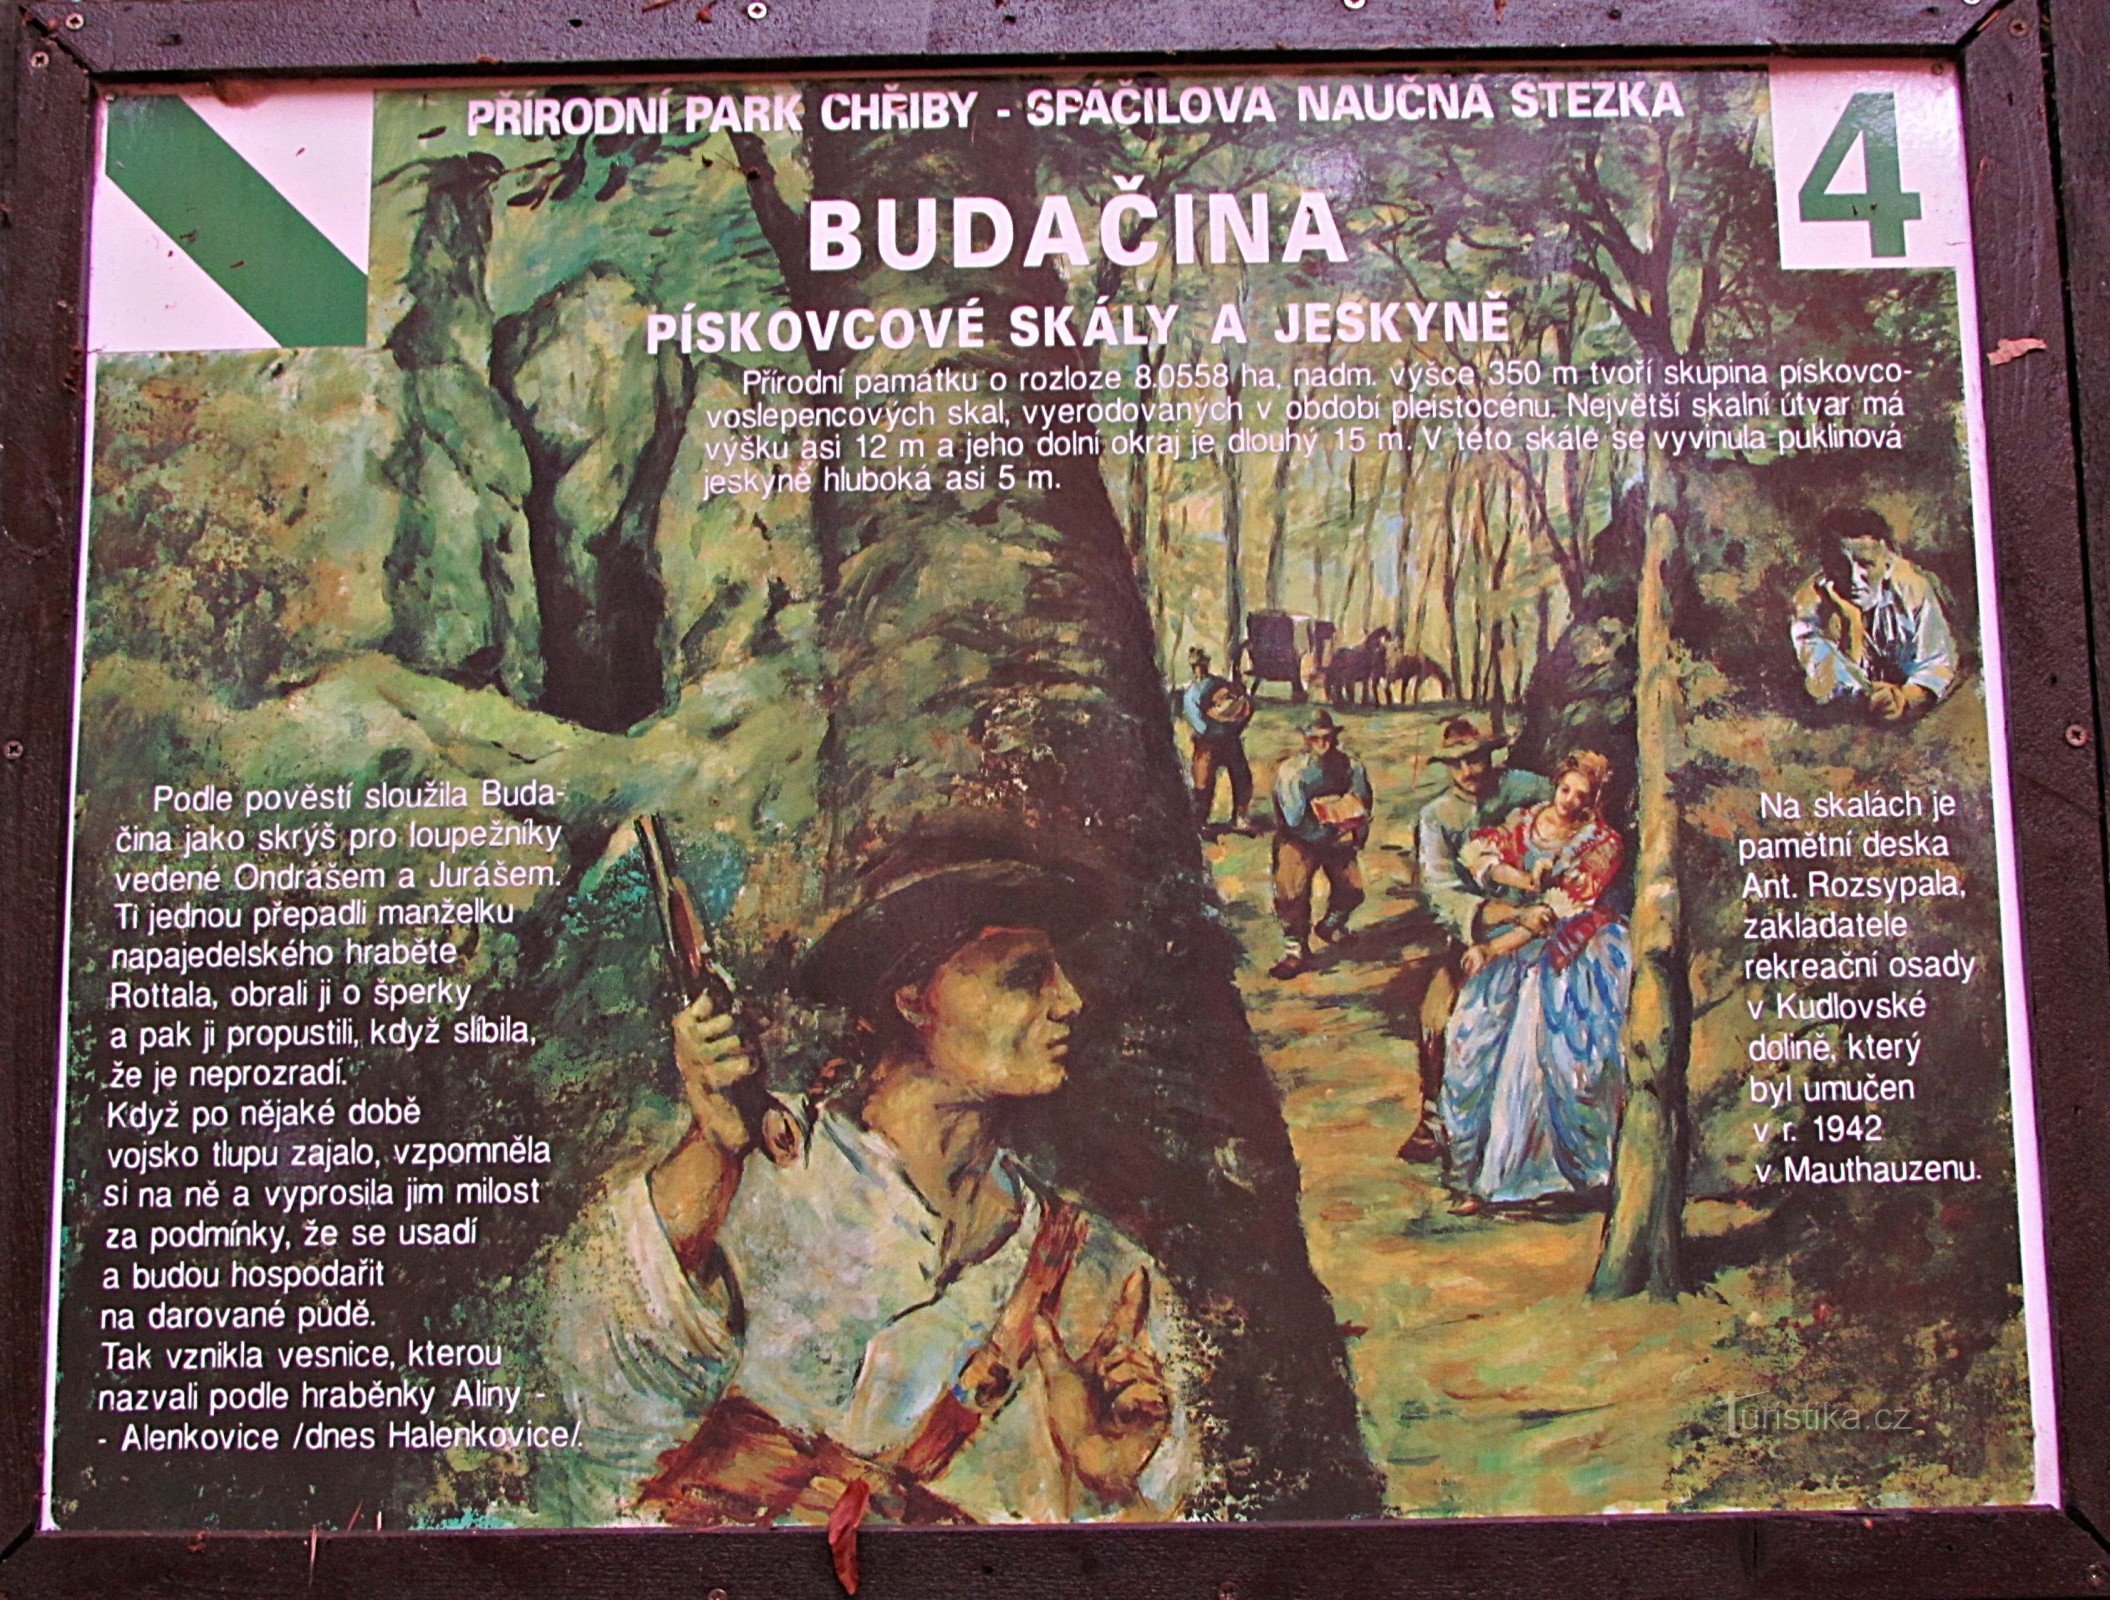 Chřiby - Budacina